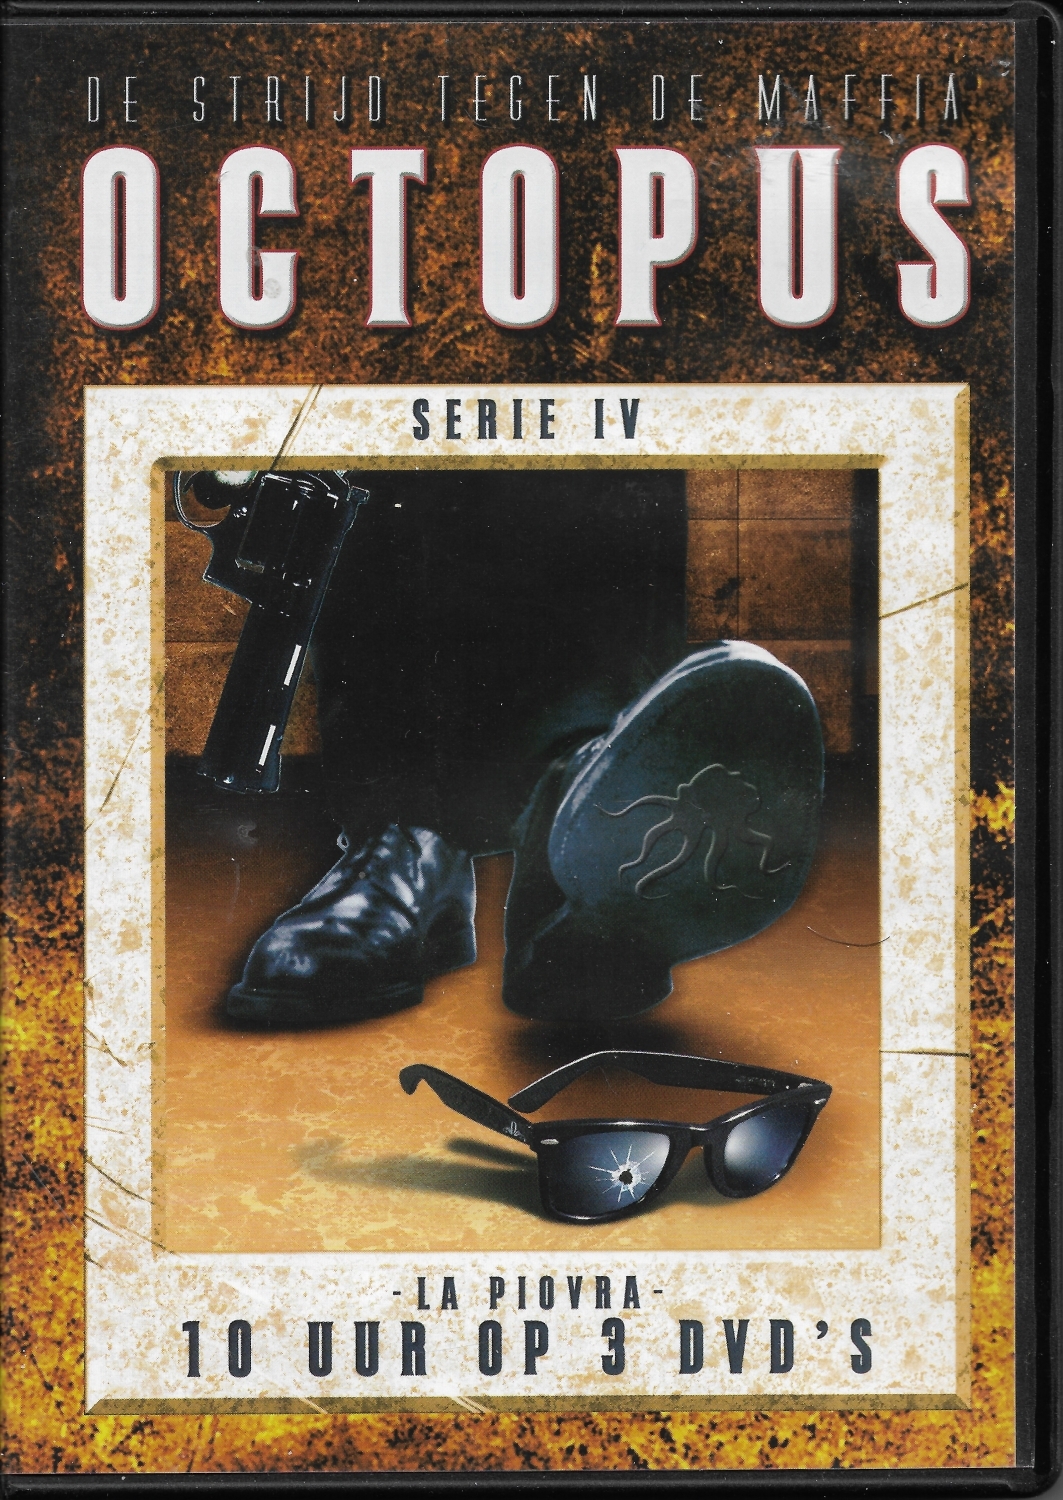 Octopus - Serie IV DVD (La Piovra 4) (Netherlands)